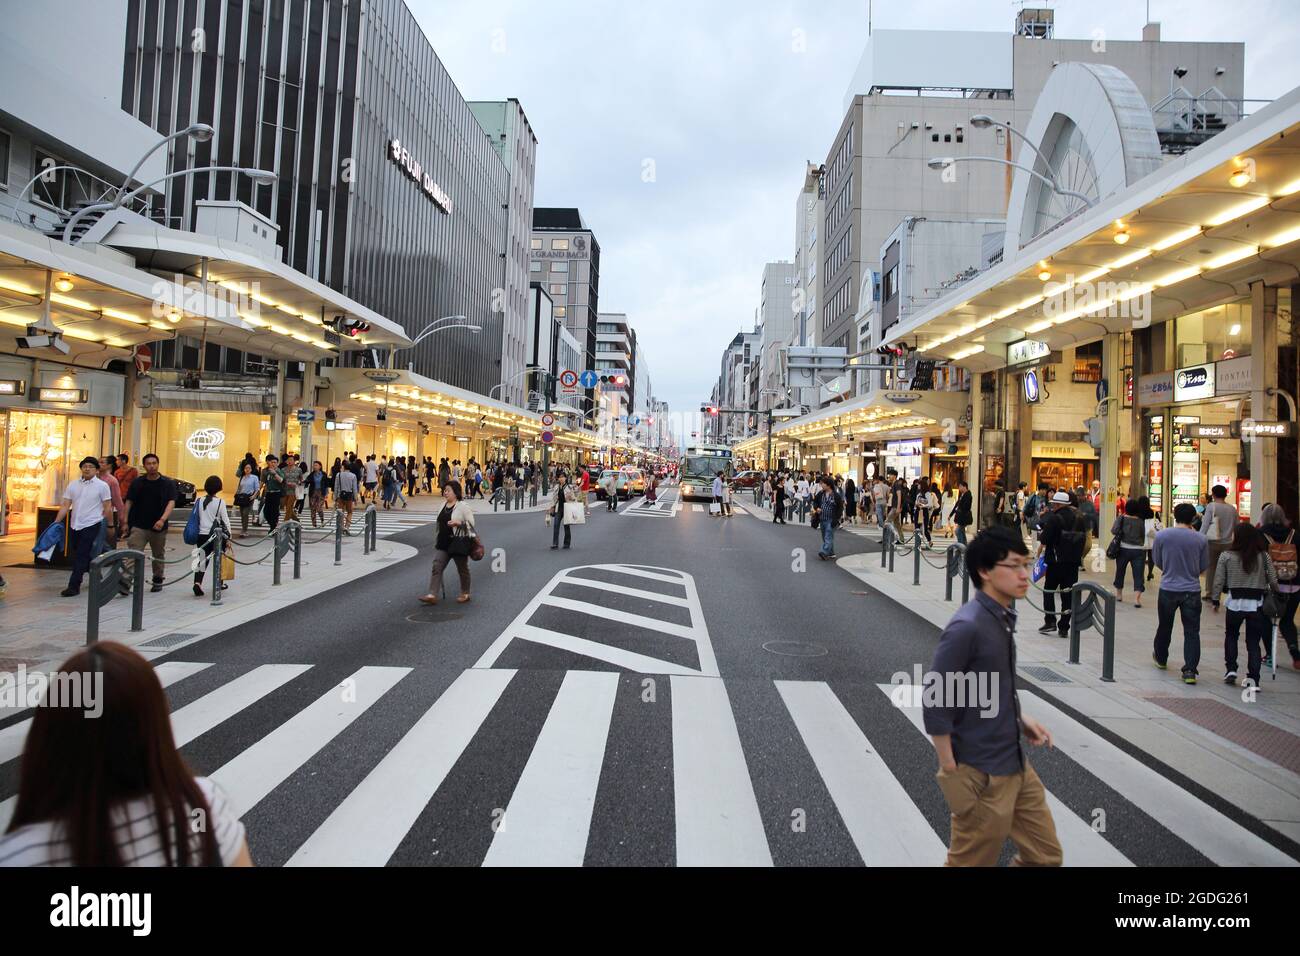 KYOTO, JAPAN - June 4, 2016: People walk in downtown street Kyoto, Japan. Stock Photo